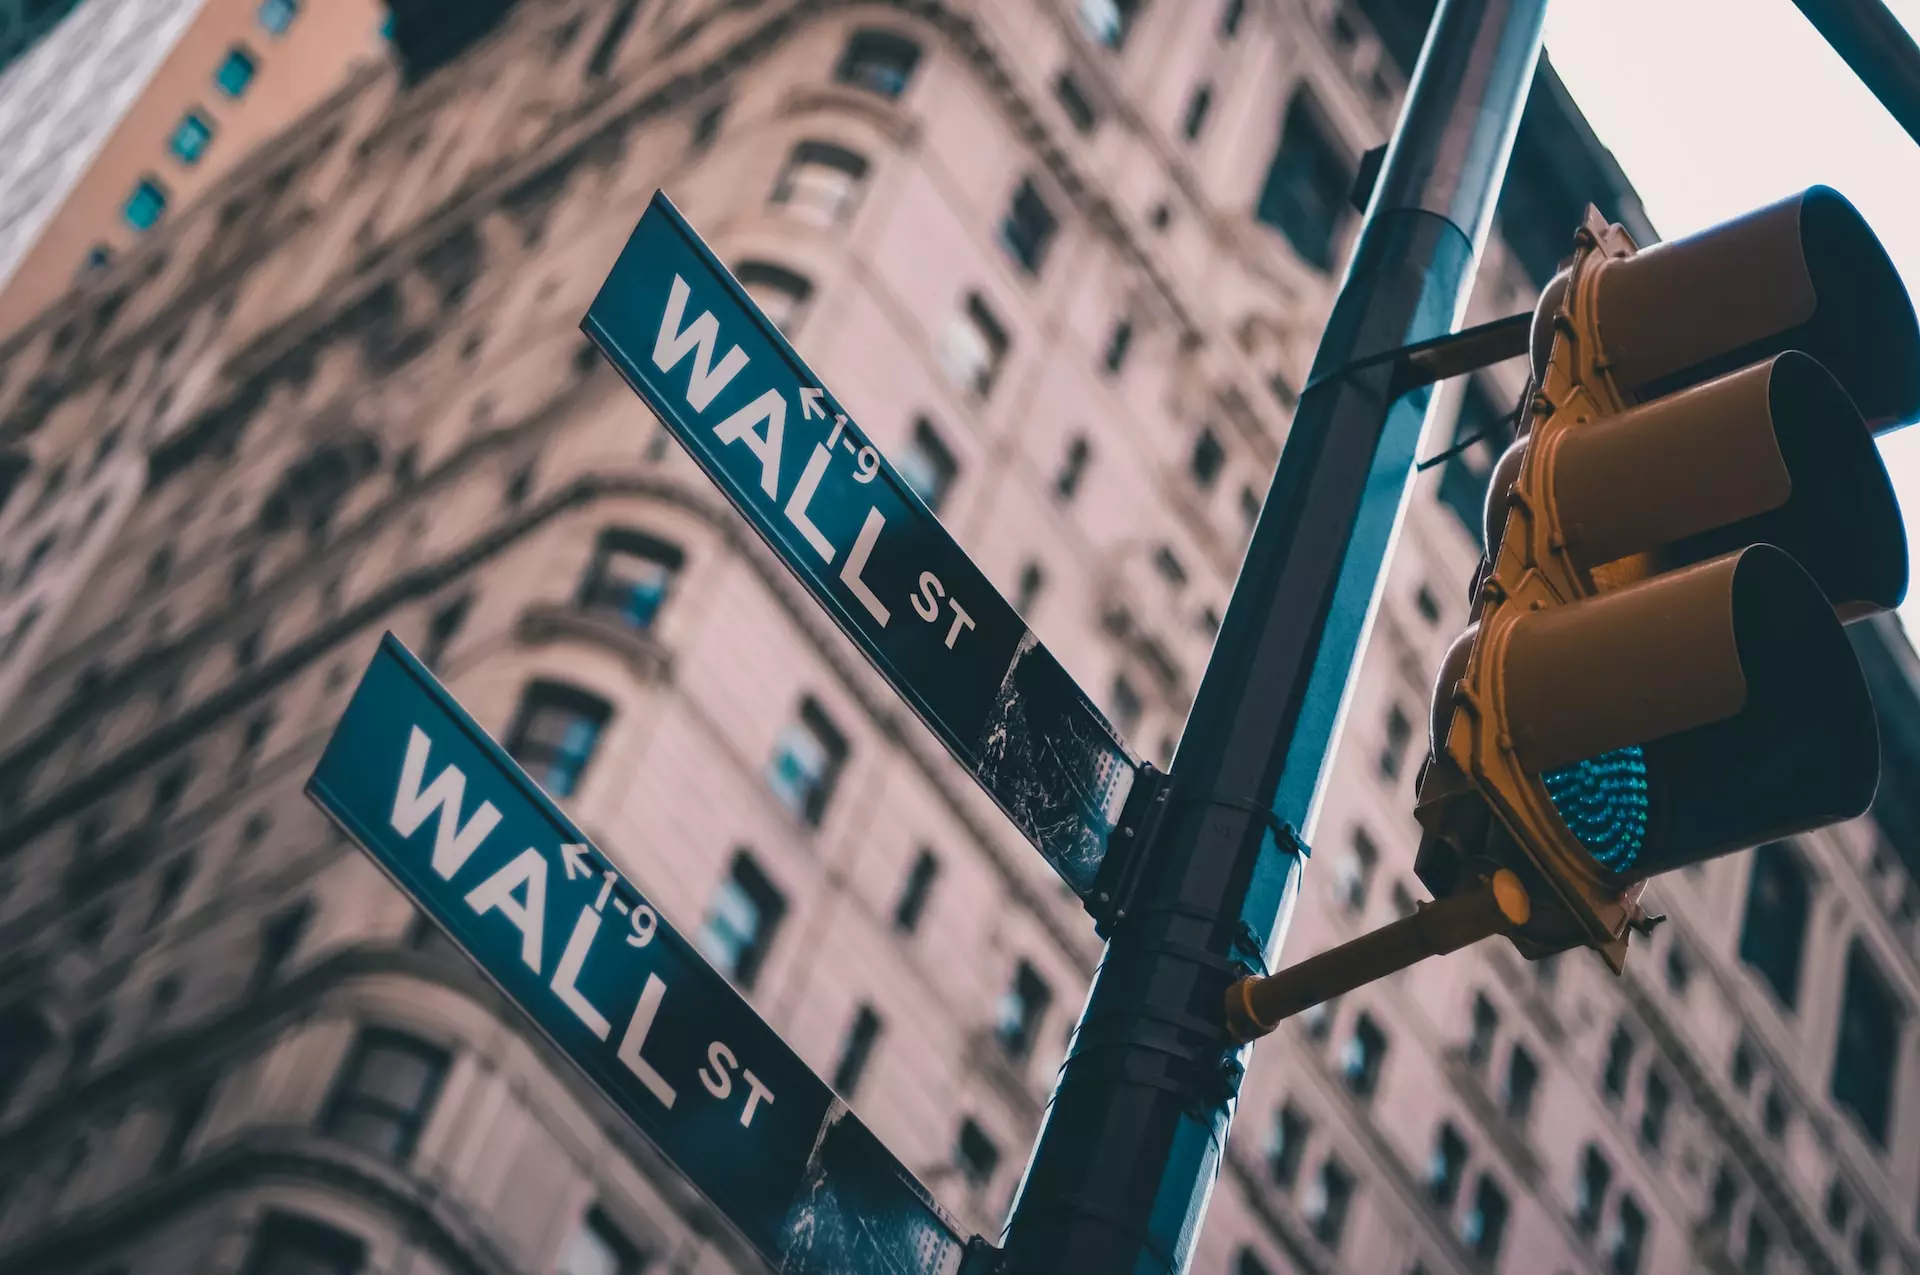 Wall Street street sign and traffic light